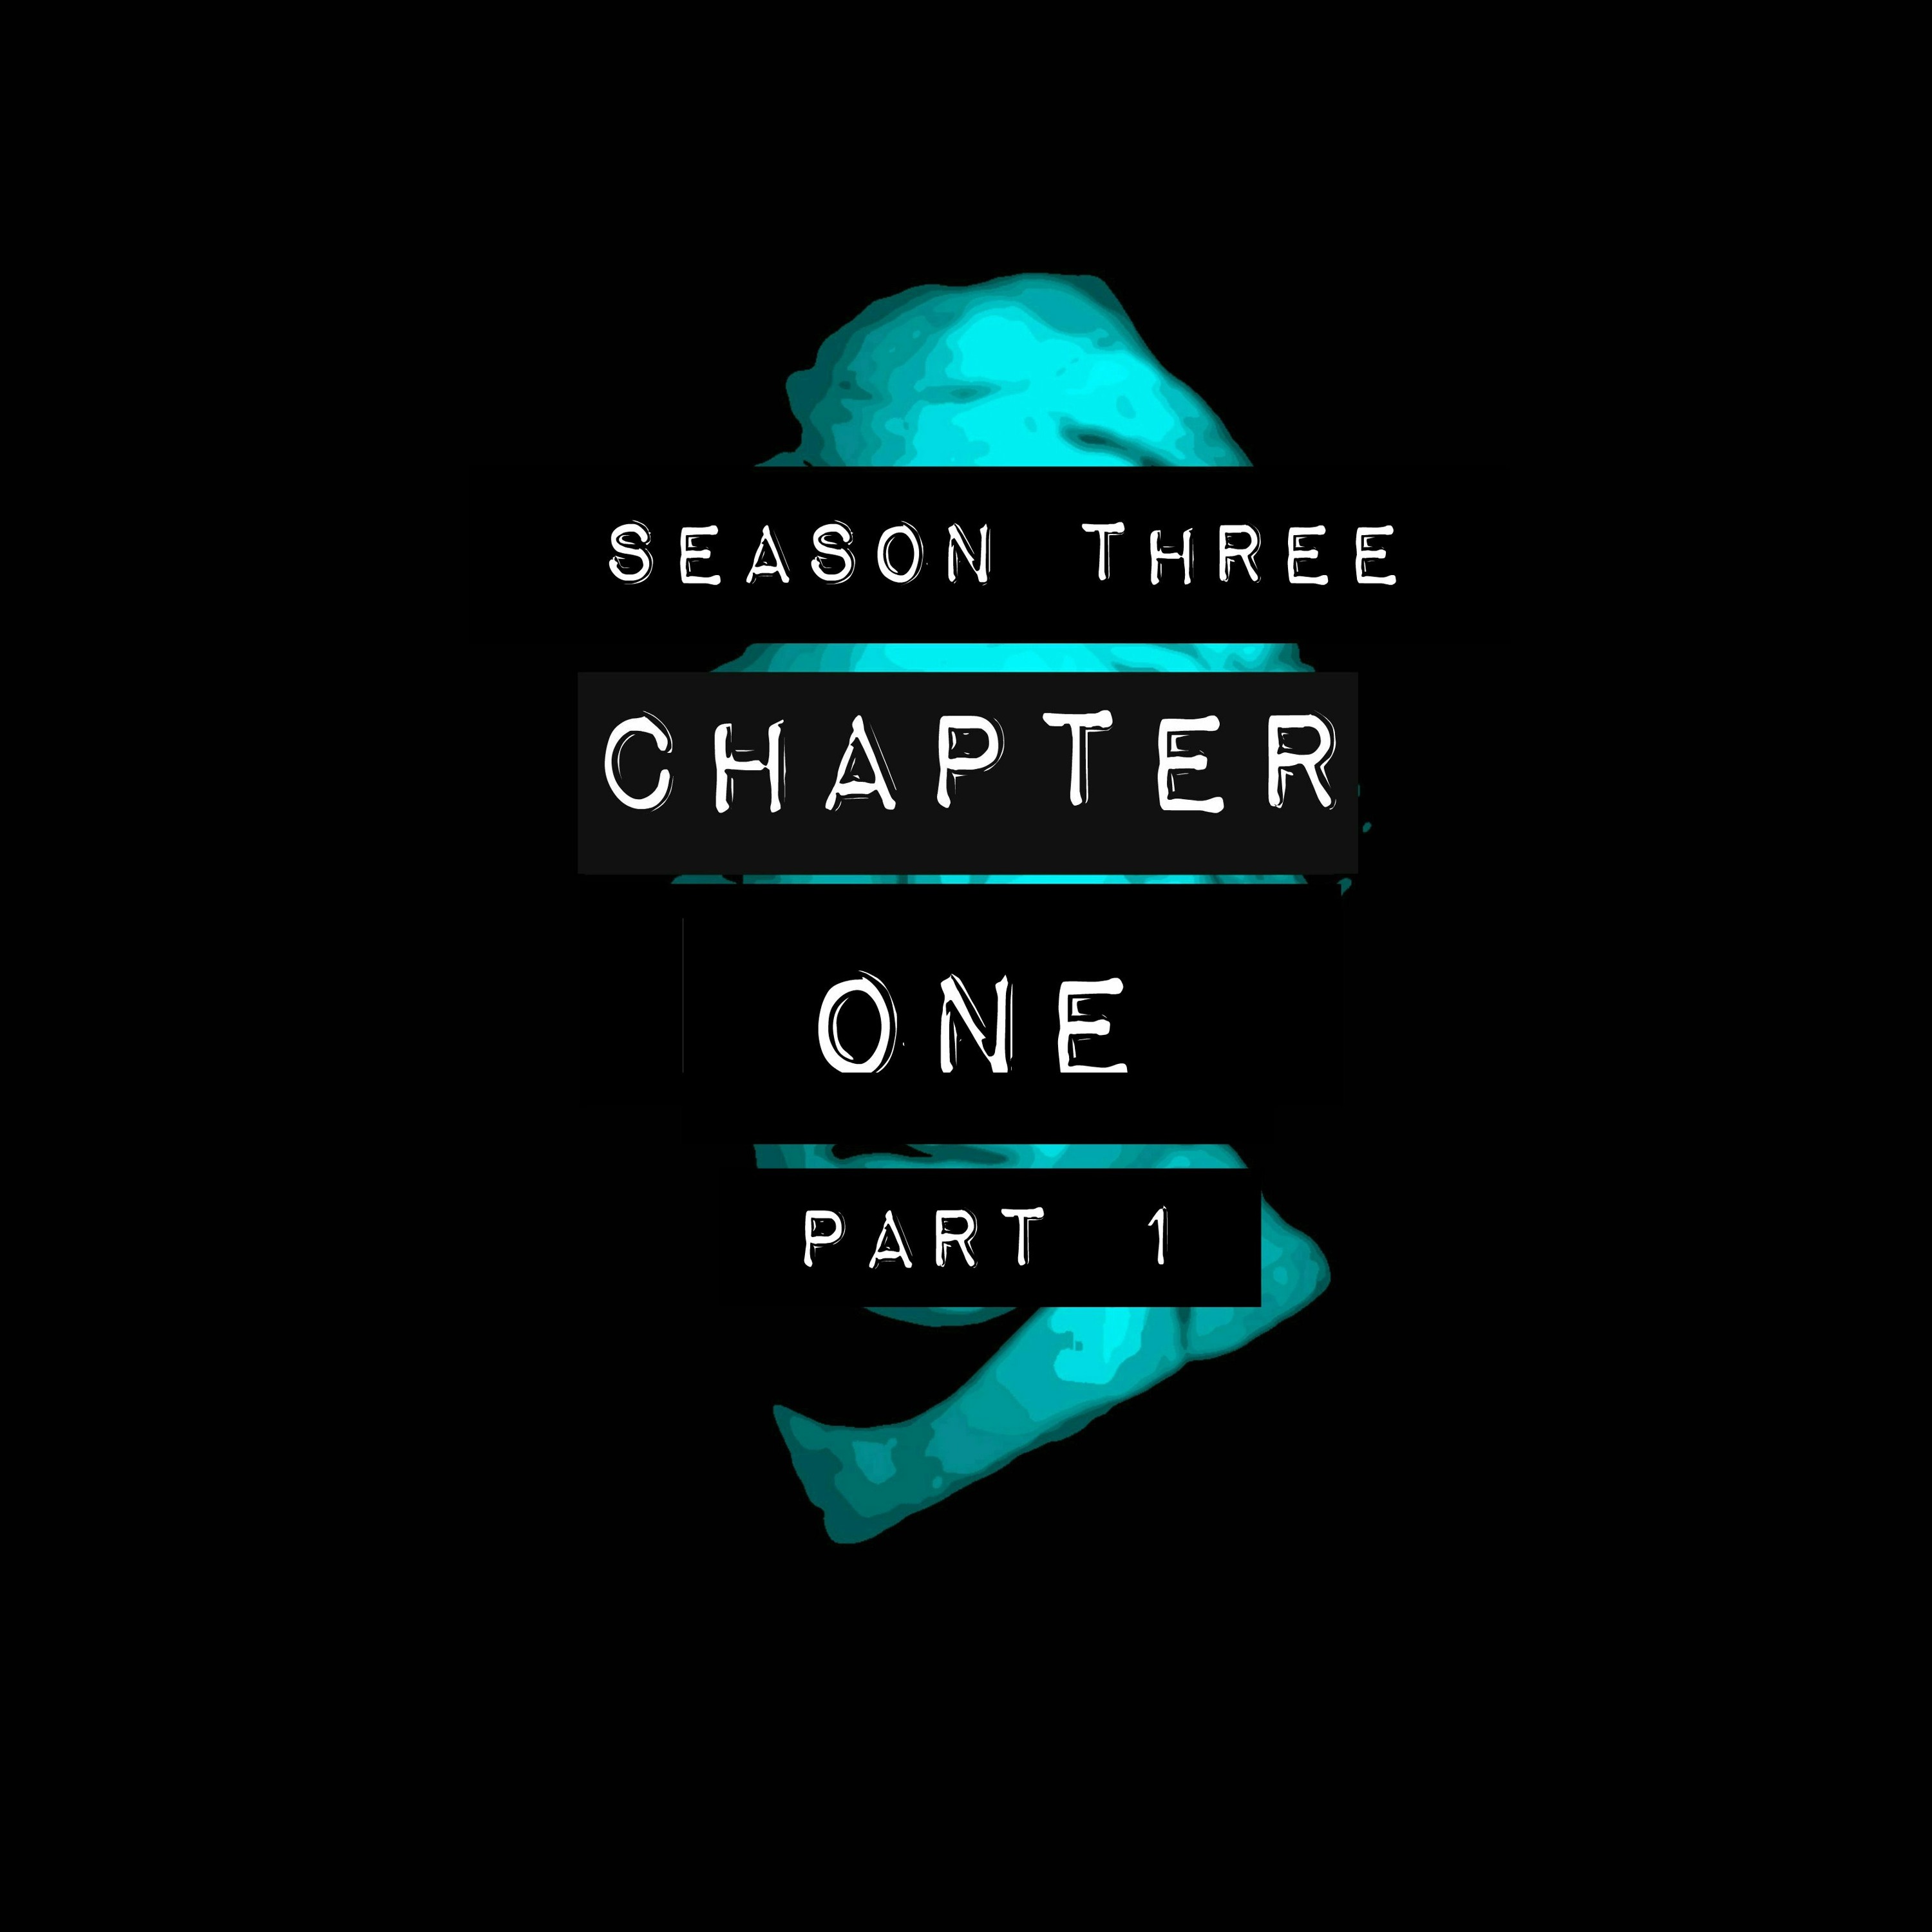 PART 1- Season 3, Chapter 1